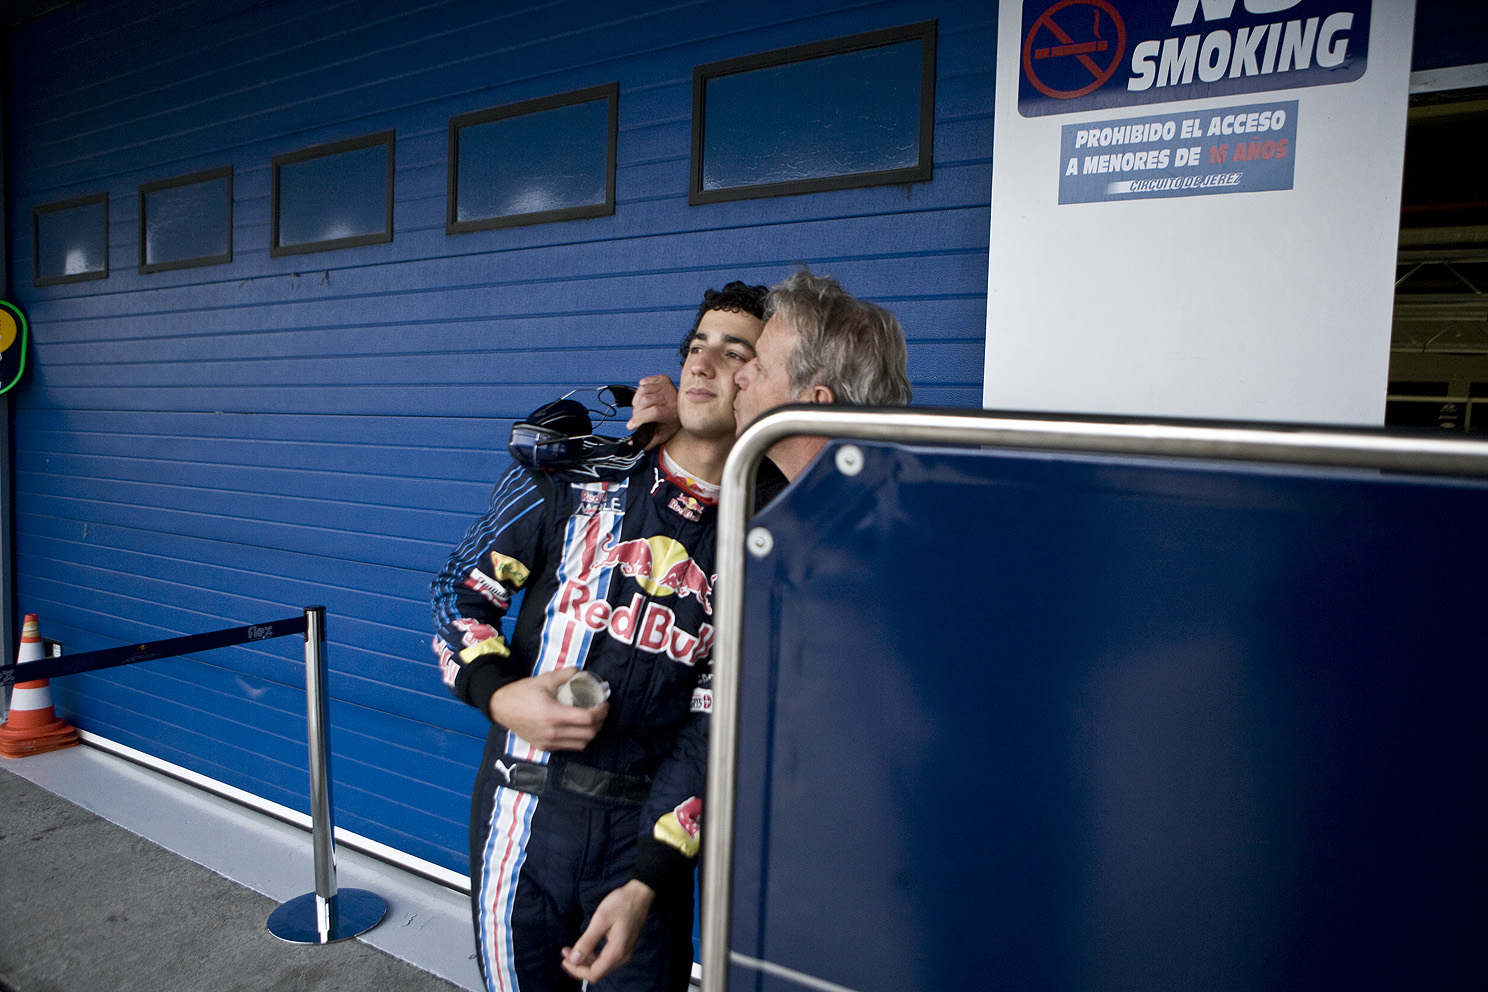 Joe Ricciardo gives his son Daniel a proud kiss